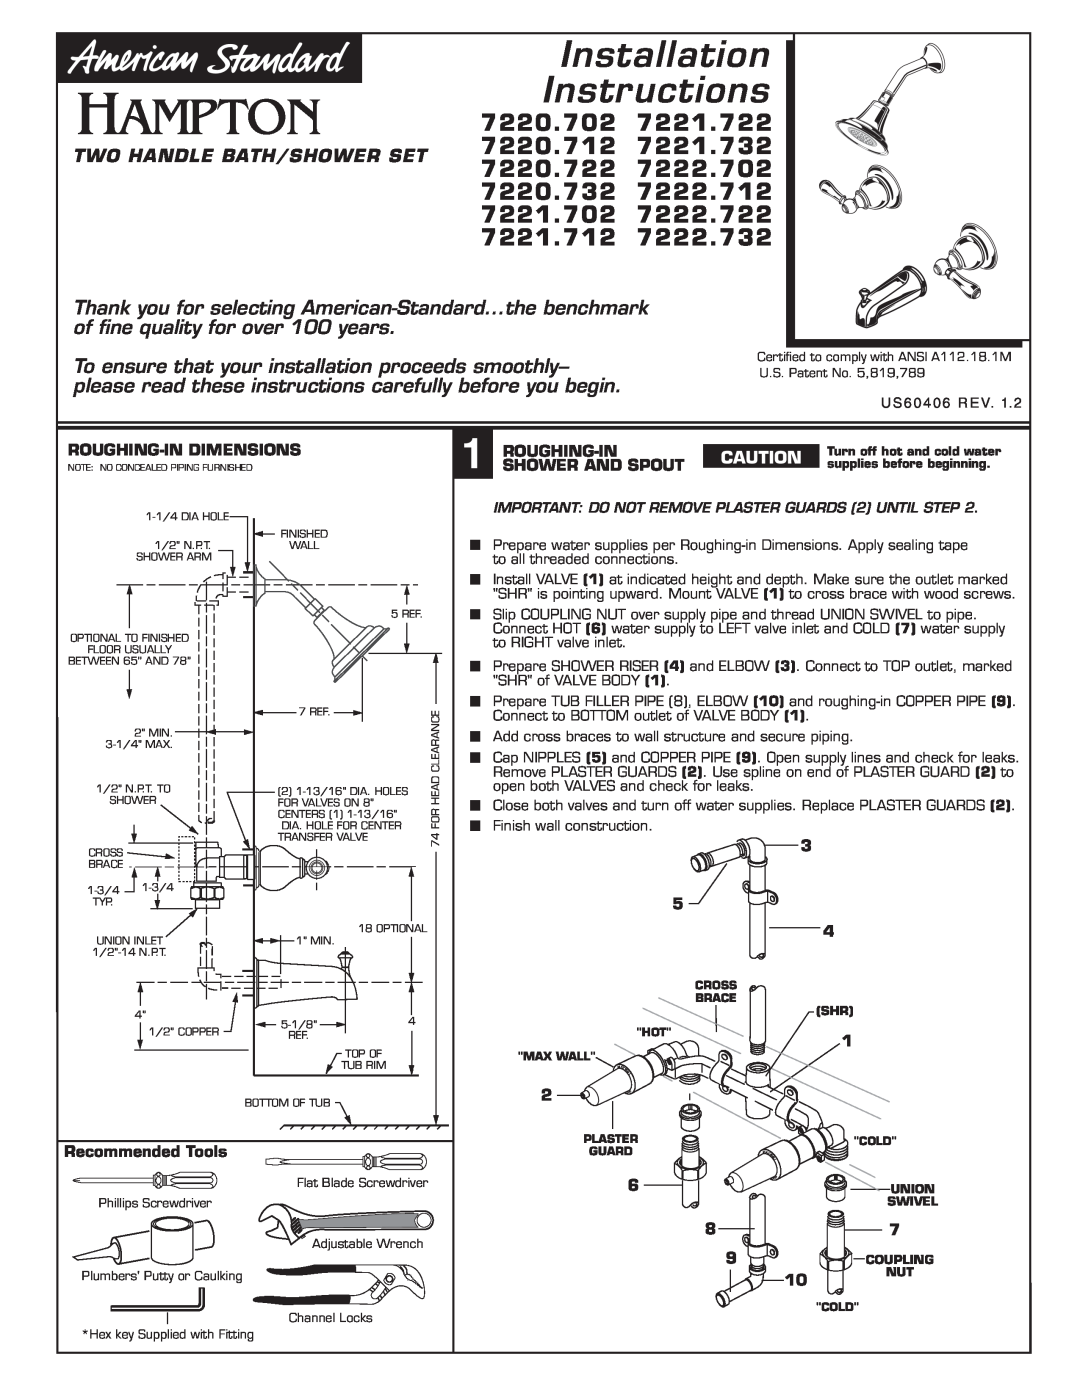 American Standard 7222.712, 7222.732 installation instructions Installation Instructions, Two Handle Bath/Shower Set 